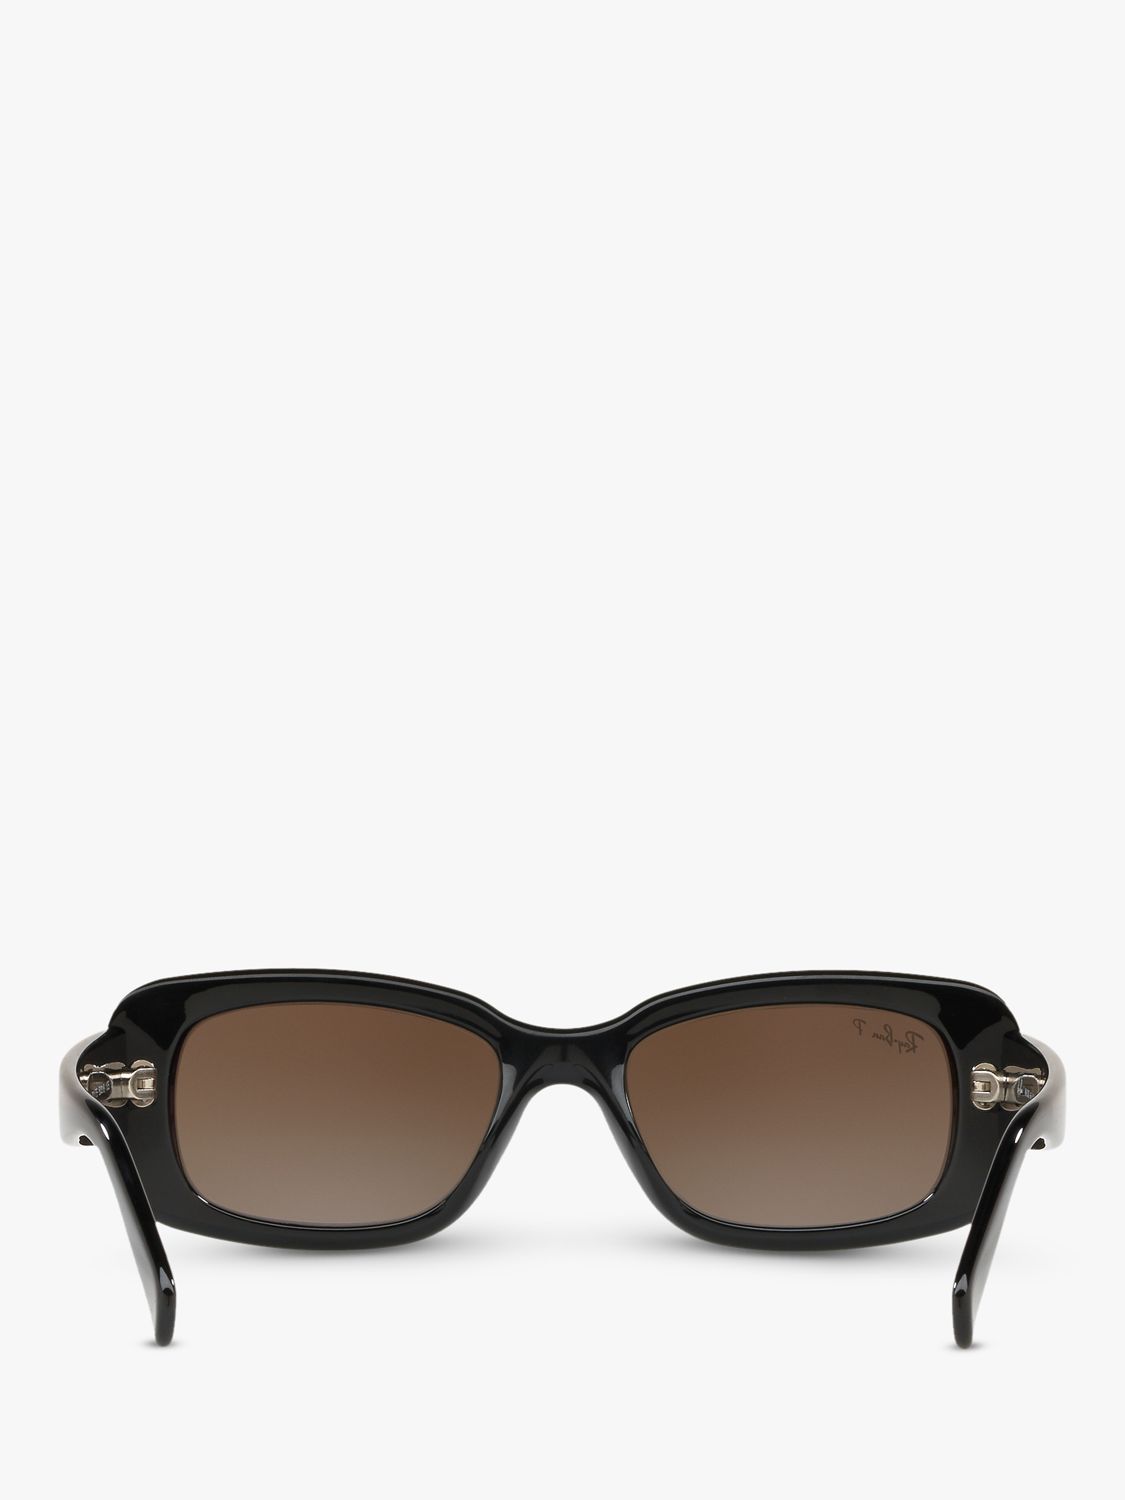 Buy Ray-Ban RB4122 Women's Polarised Rectangular Sunglasses, Black/Brown Gradient Online at johnlewis.com